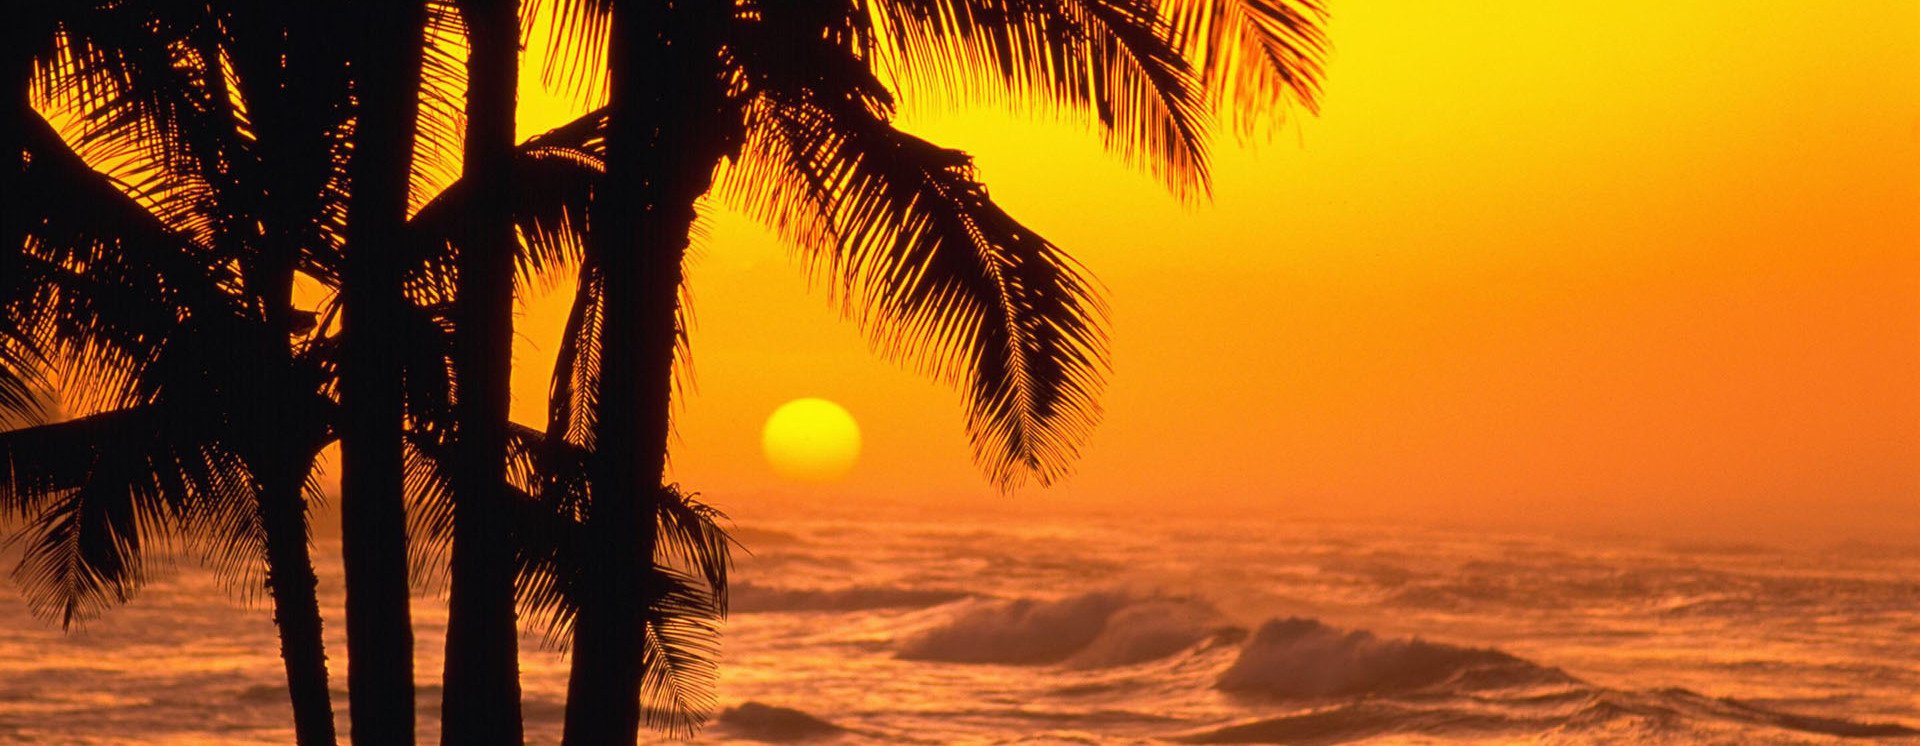 Palm trees sunset 29 copy